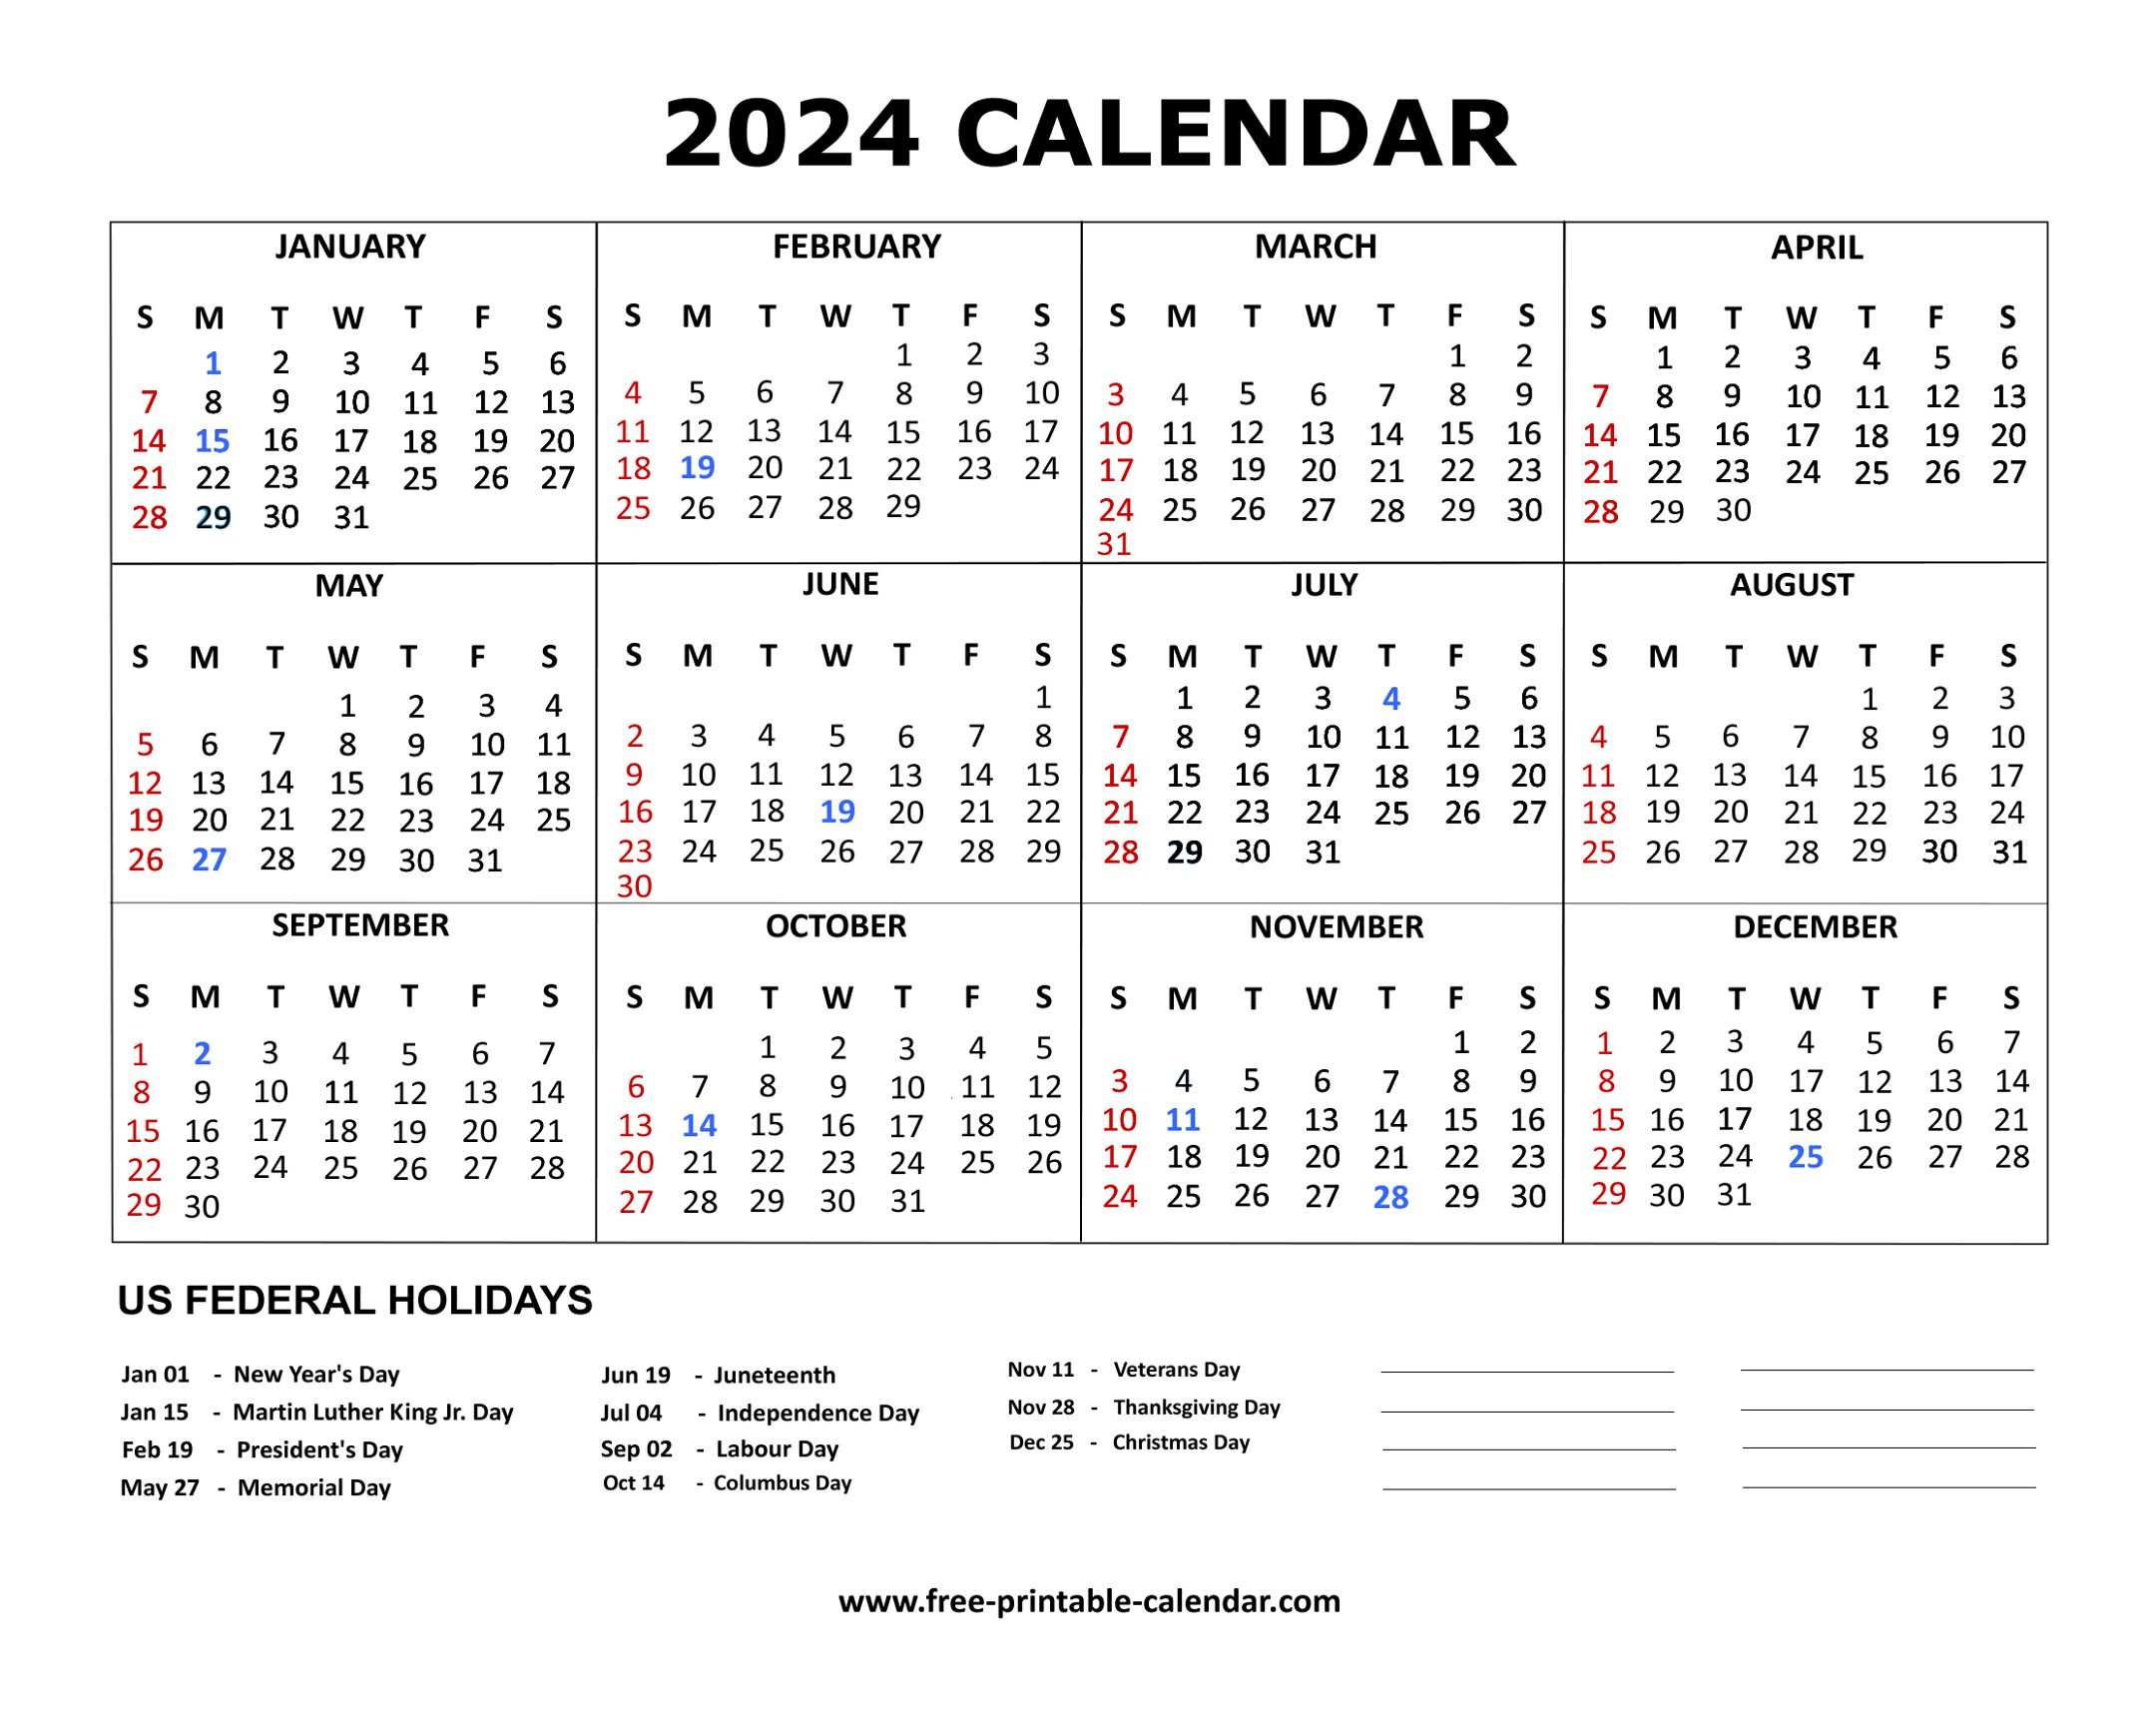 2024 Calendar | Printable Calendar 2024 With Holidays Free Download